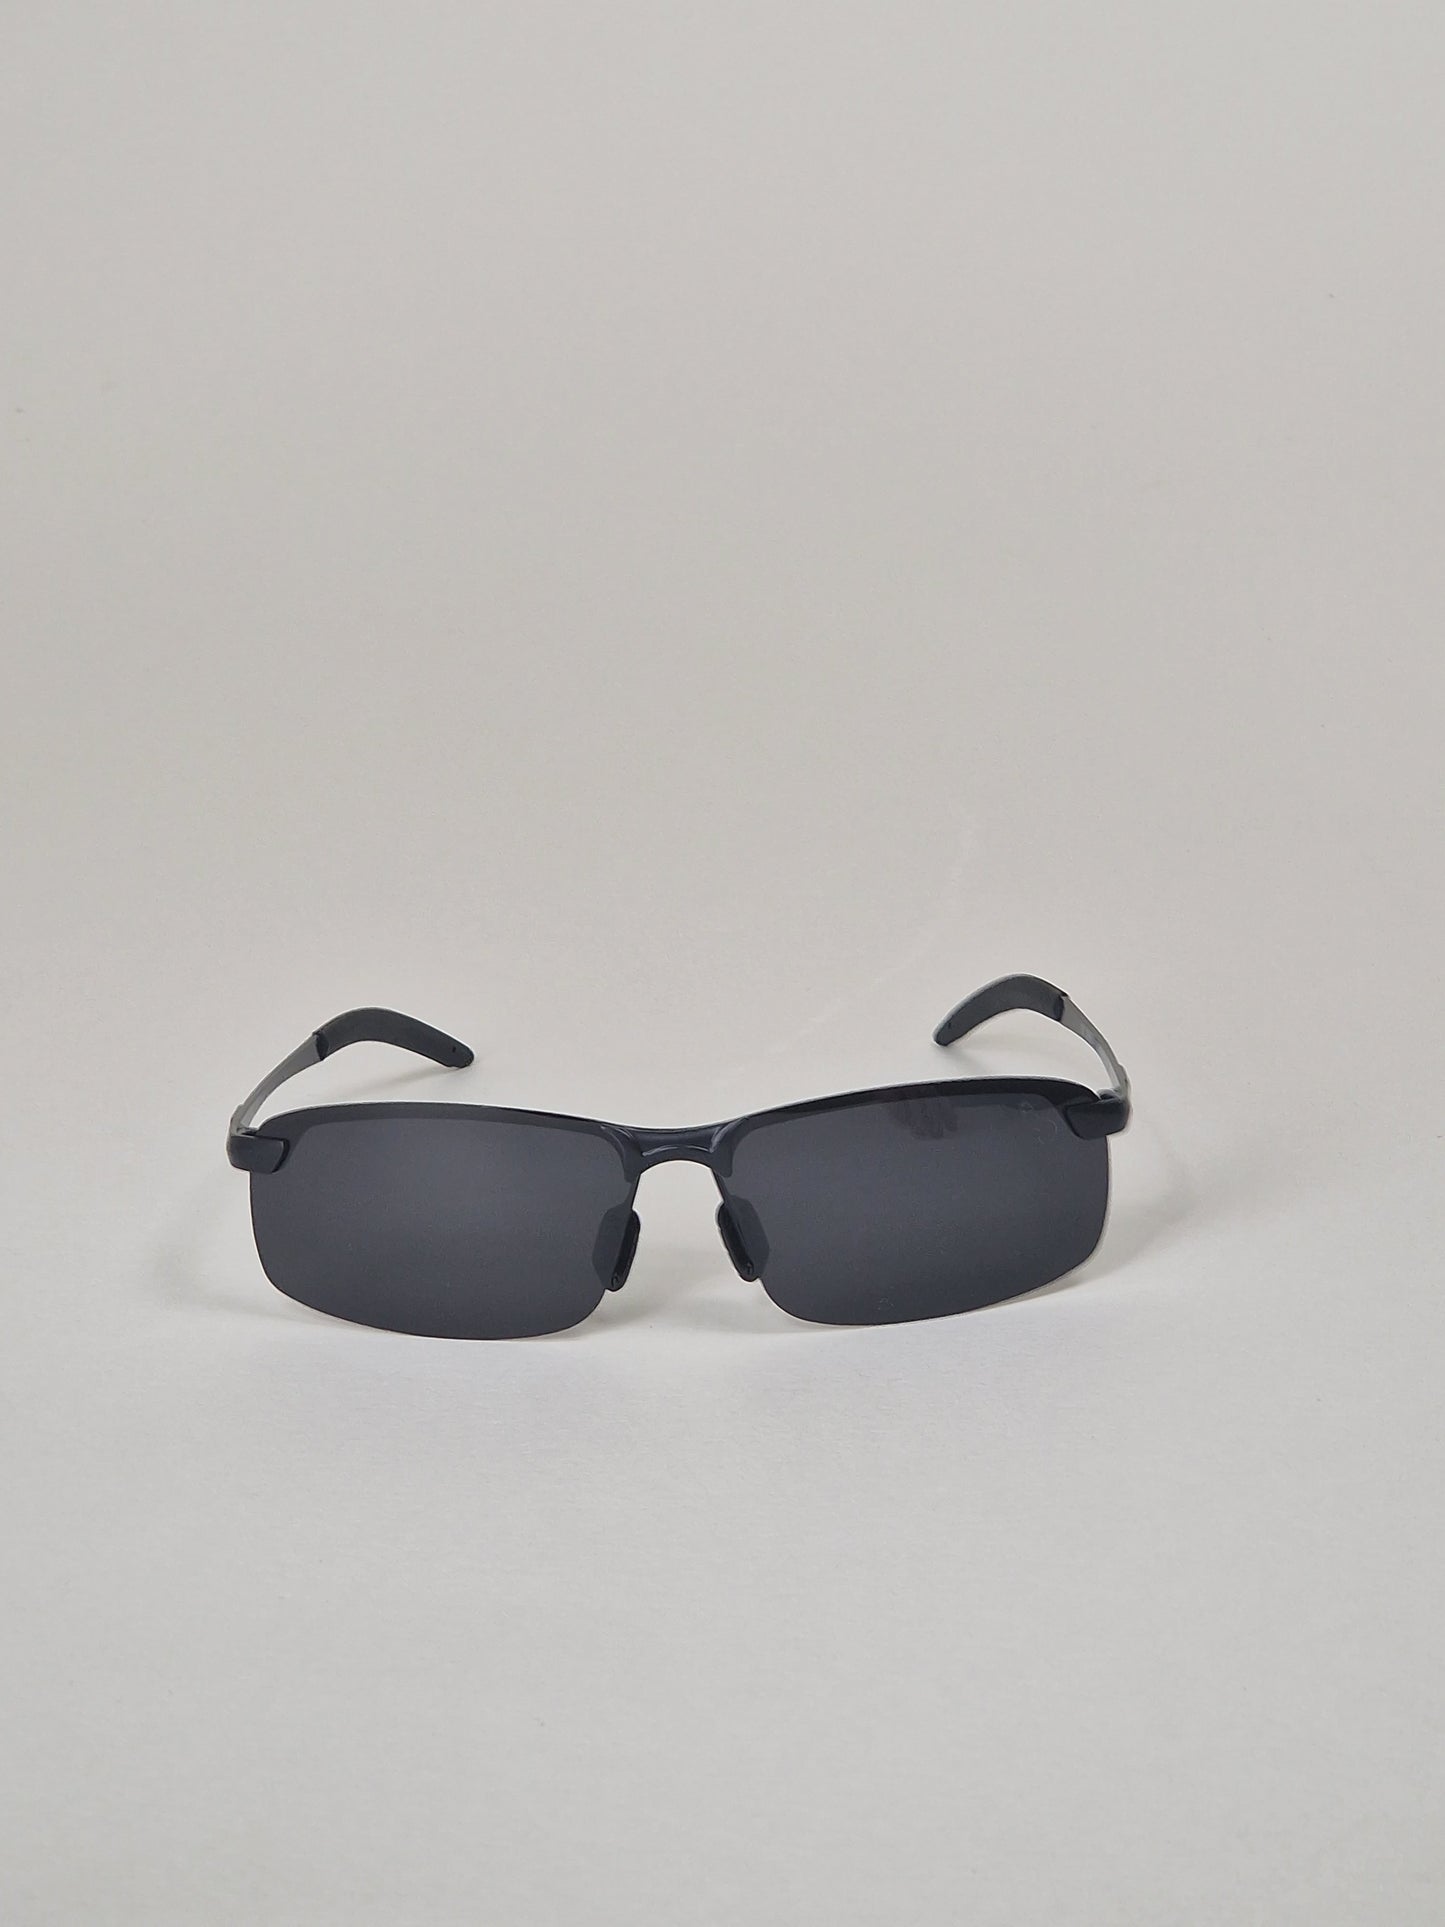 Sunglasses, model 36 - Black tinted.